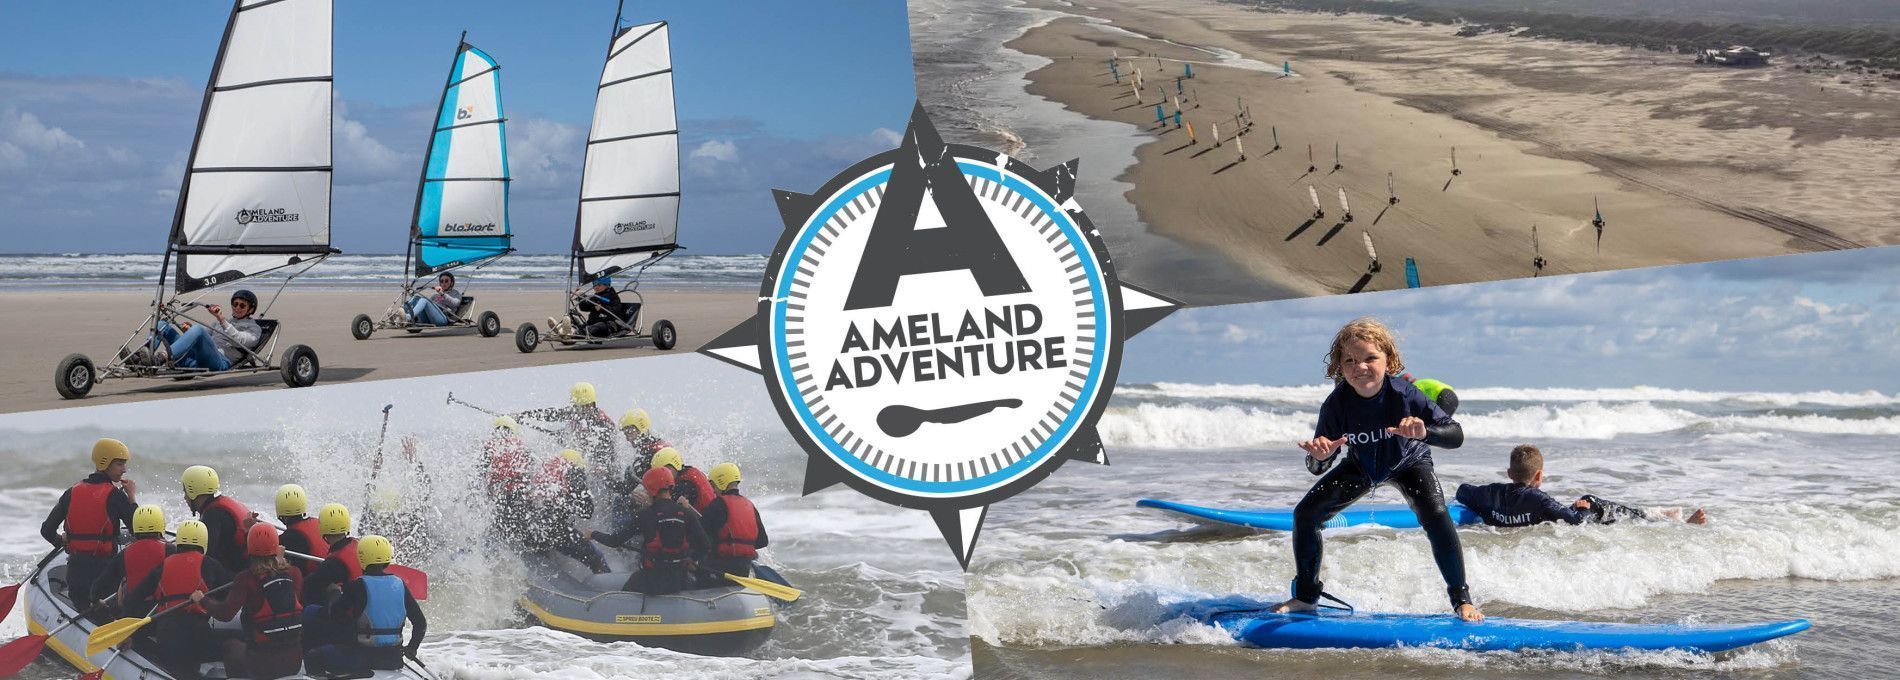 Ameland Adventure - VVV Ameland